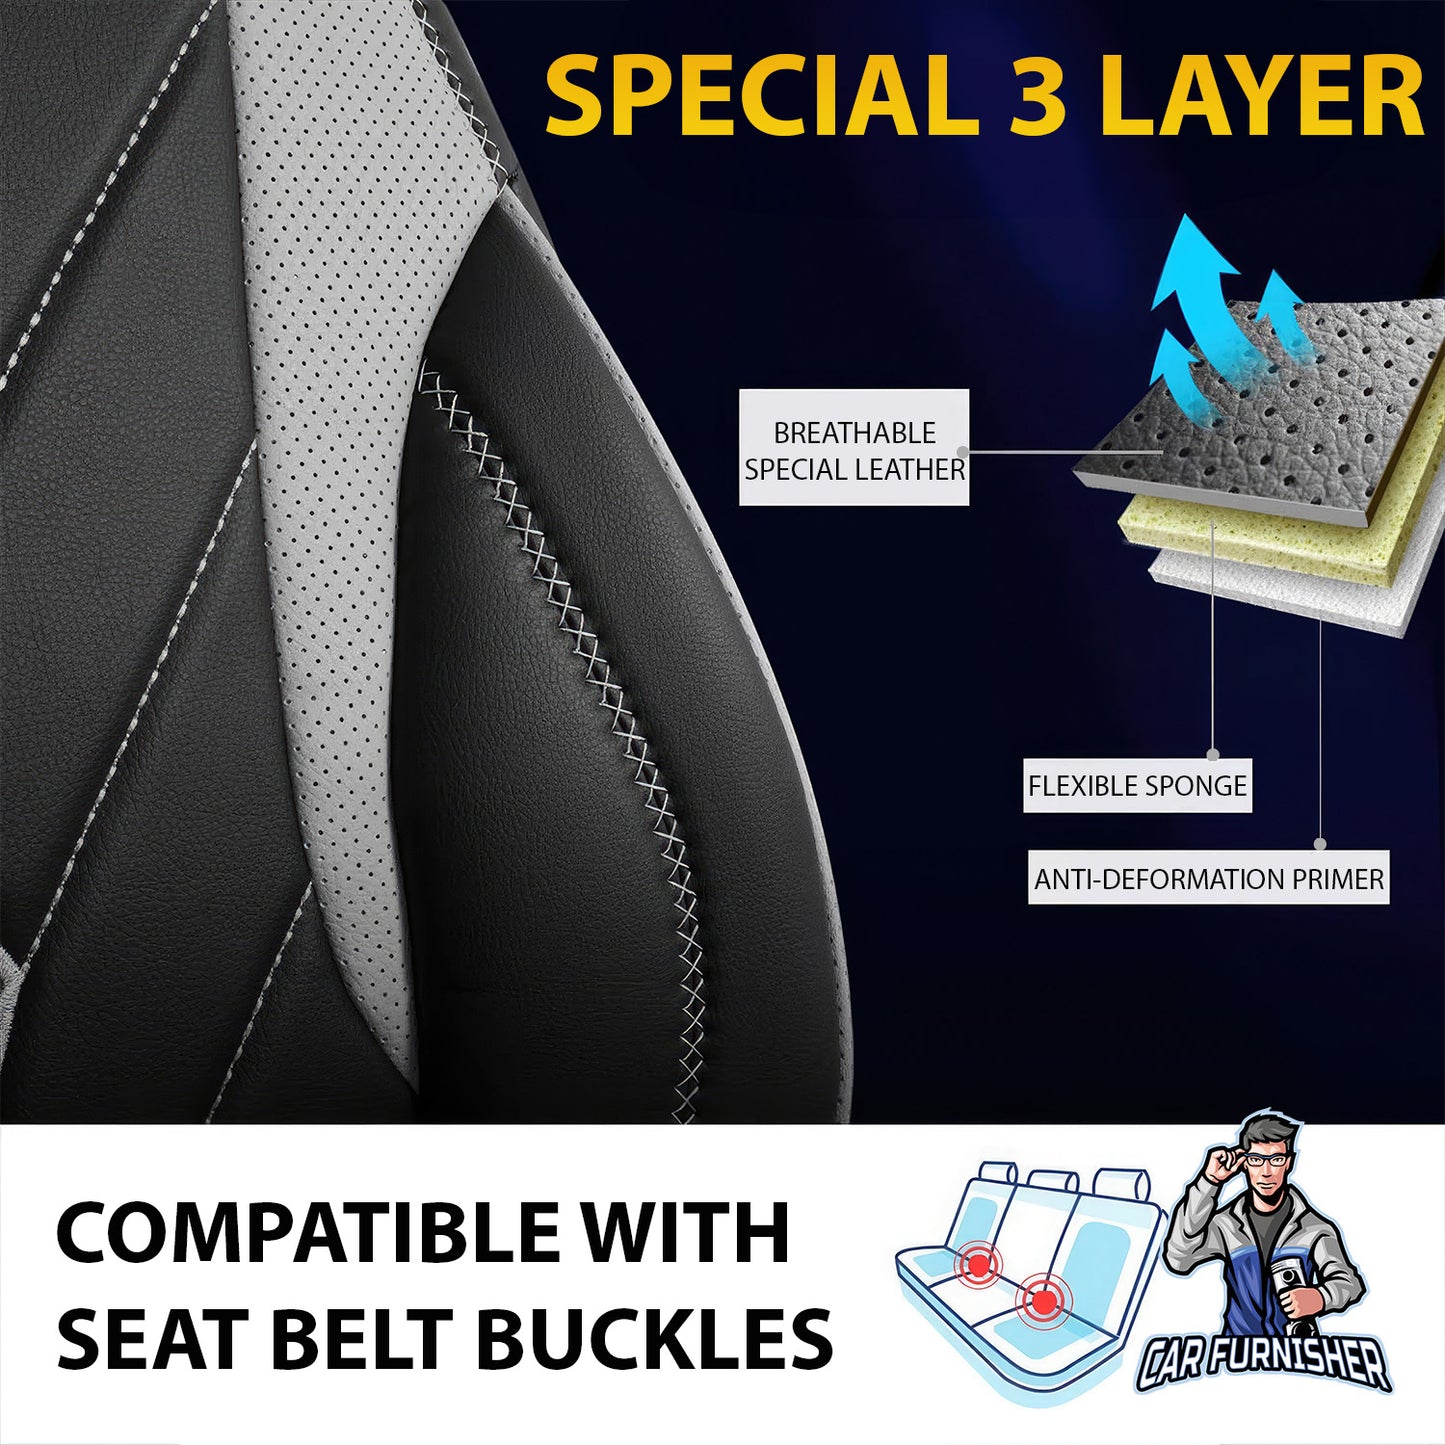 Car Seat Cover Set - Texas Design Gray 5 Seats + Headrests (Full Set) Full Leather